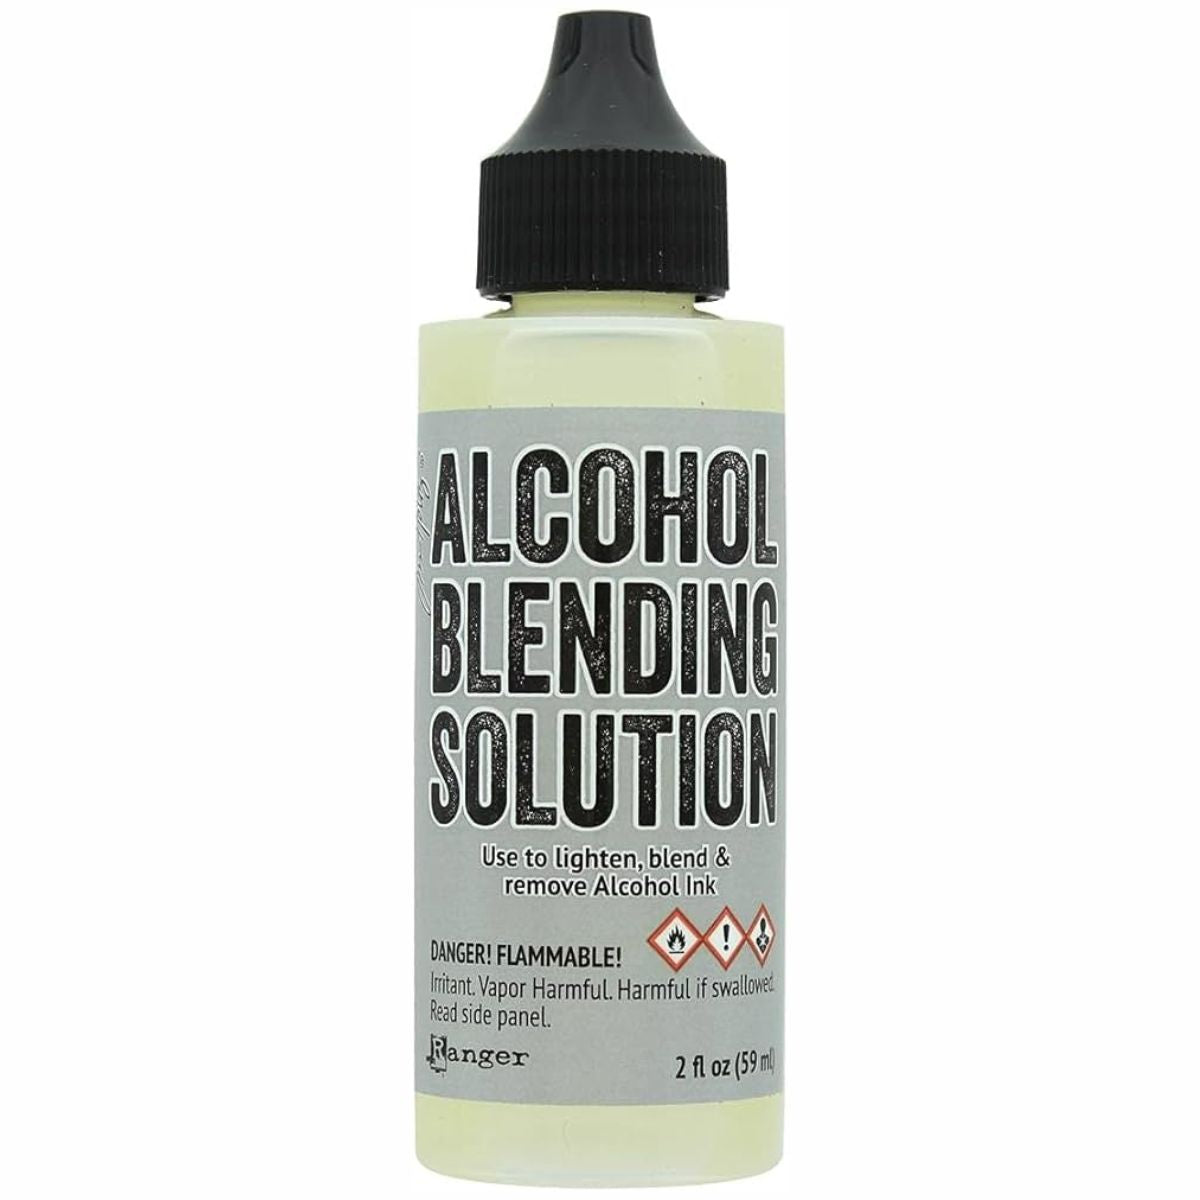 Tim Holtz Alcohol Blending Solution 2oz / Solución para Mezclar Tintas Alcohol